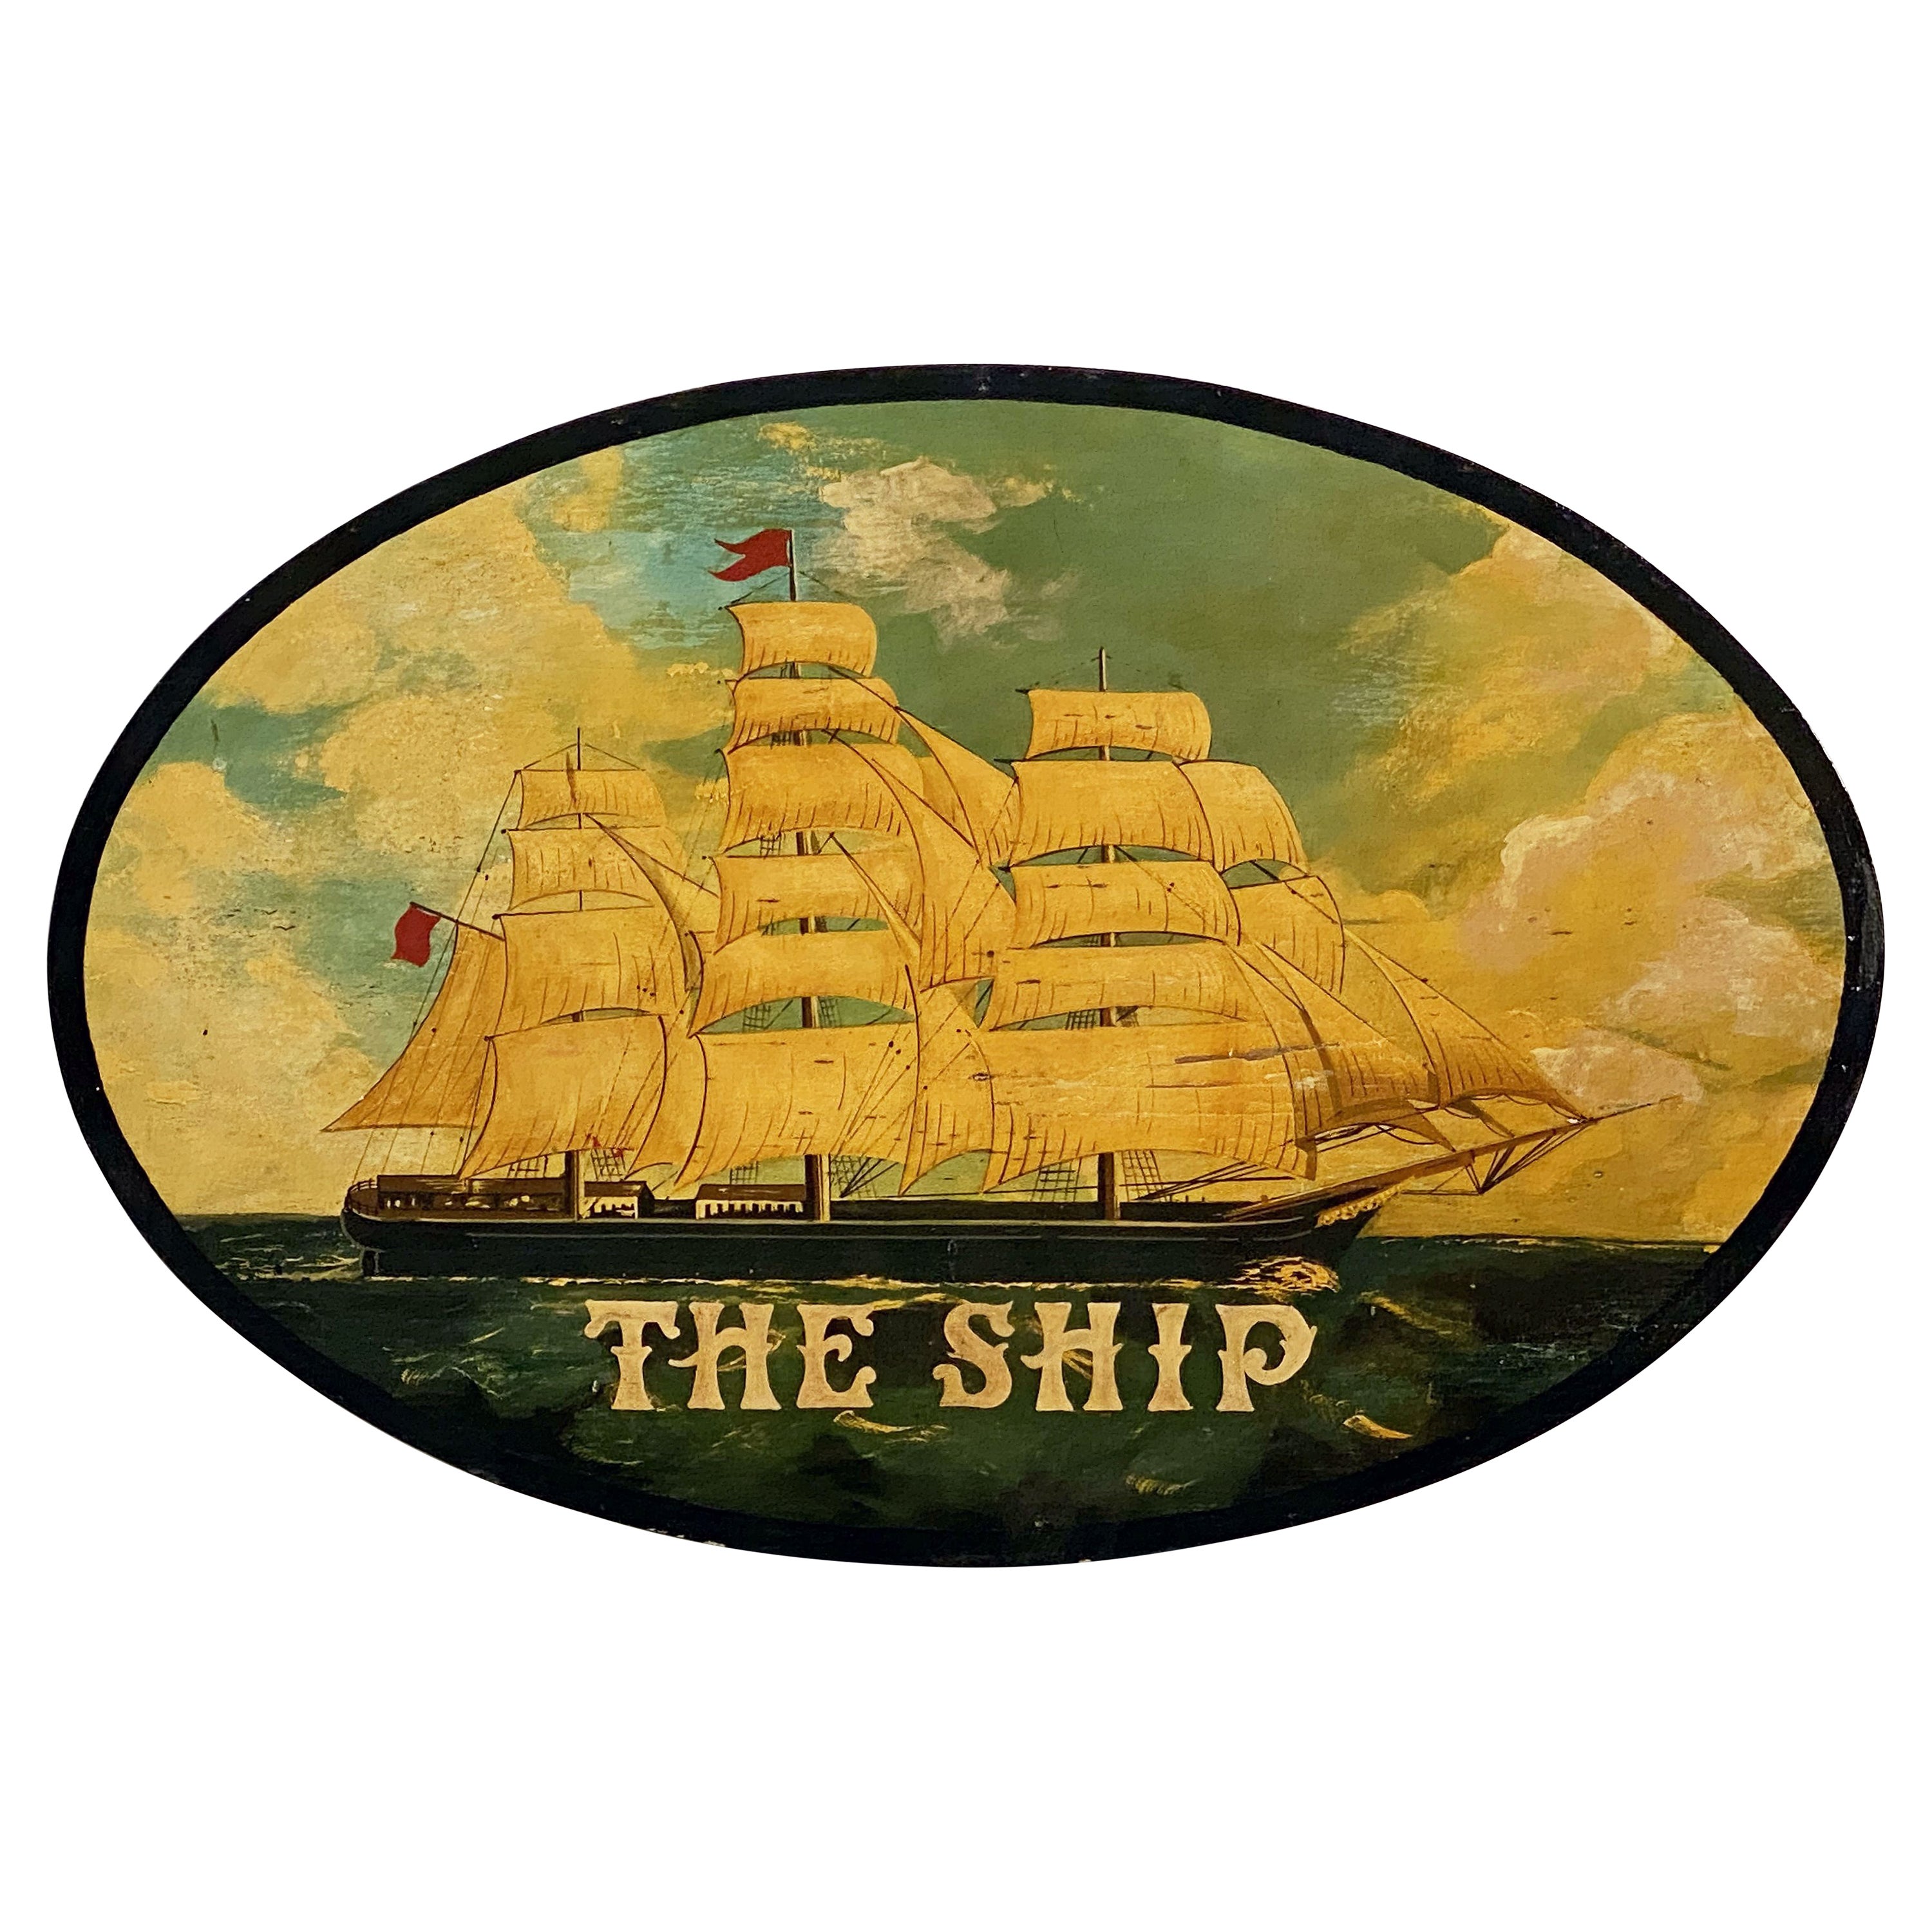 English Pub Sign, "The Ship"